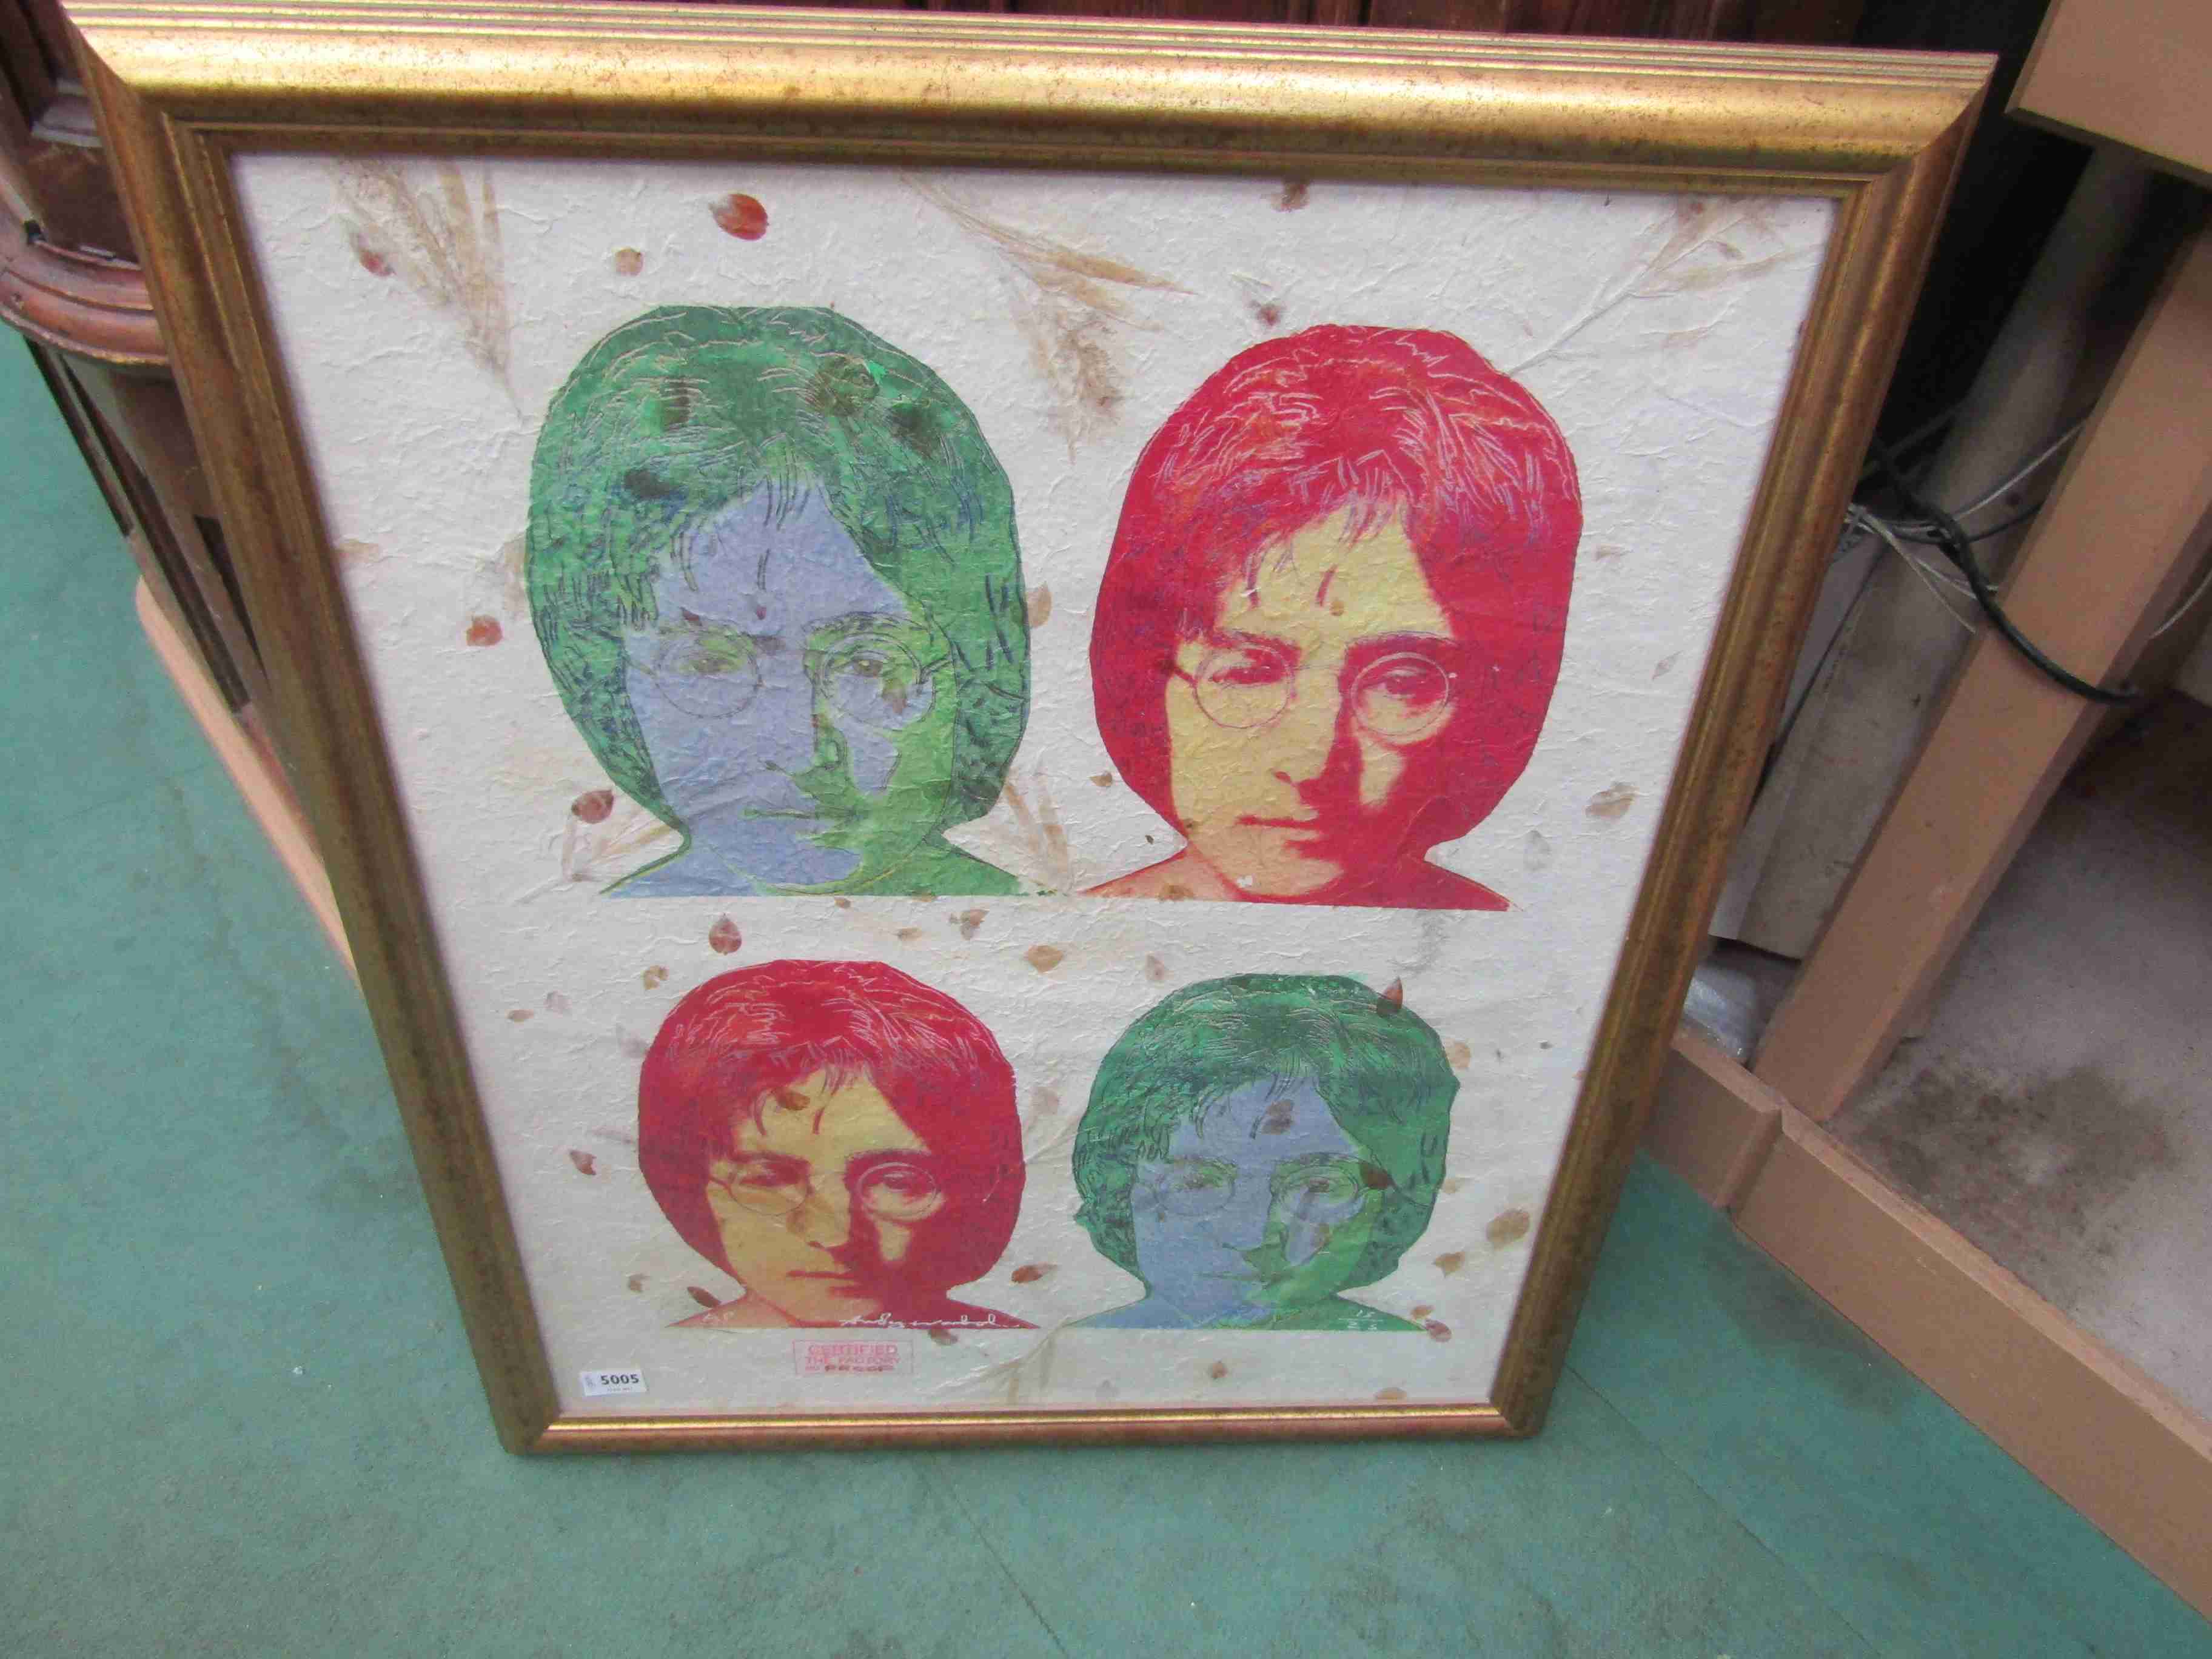 A framed and glazed Pietro Psaier Factory Proof print of John Lennon,